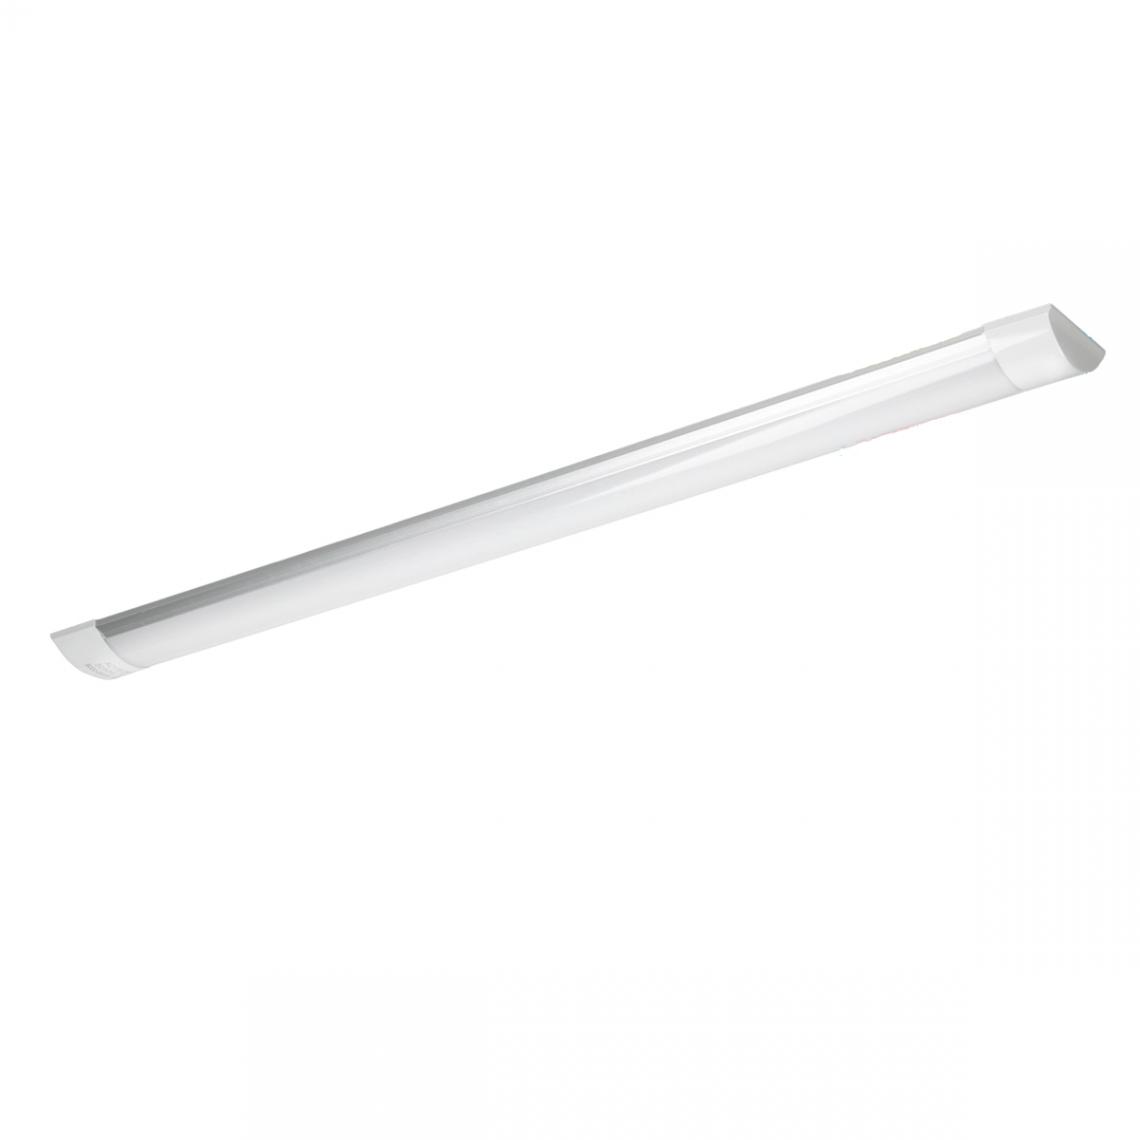 Ecd Germany - LED batten tube 28W 90cm blanc froid surface luminaire slim barre plafond - Tubes et néons